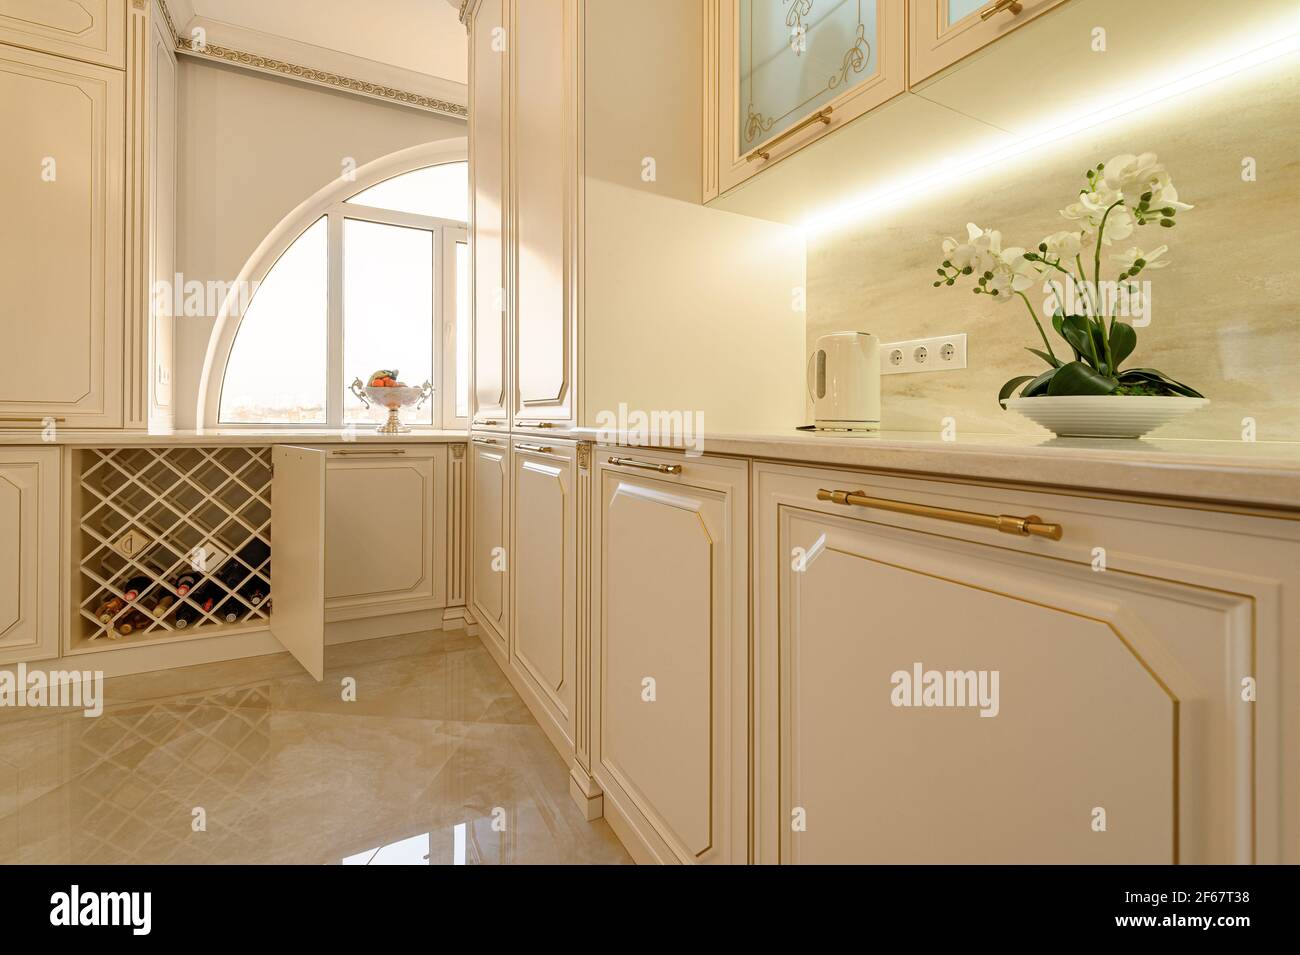 https://c8.alamy.com/comp/2F67T38/luxury-beige-and-gold-classic-kitchen-interior-2F67T38.jpg